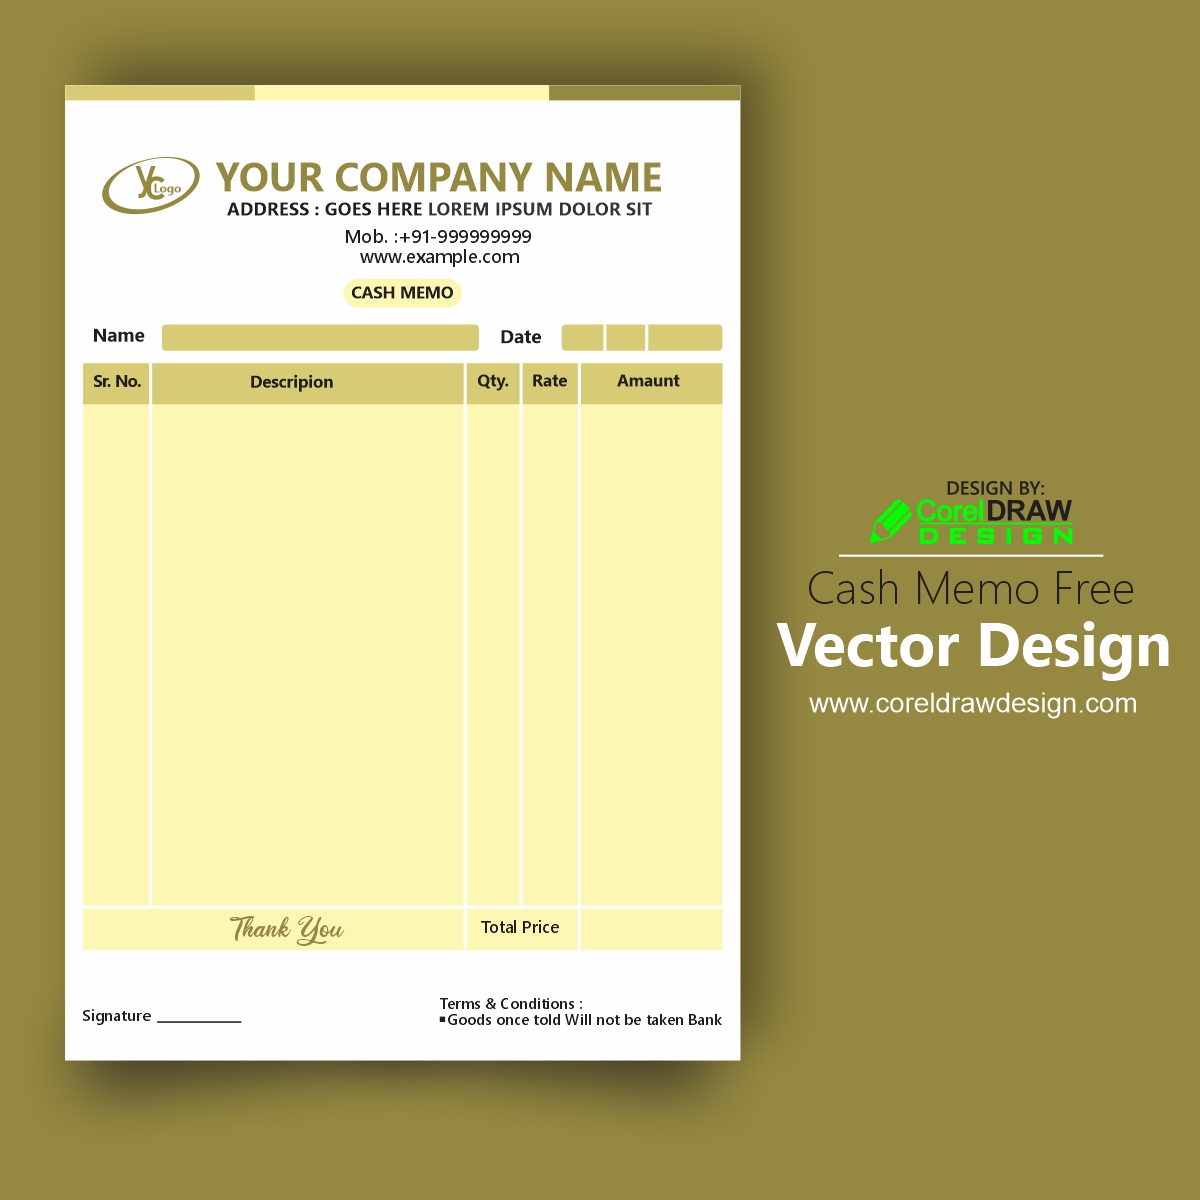 Download Cash Memo Free Vector Design | CorelDraw Design ...